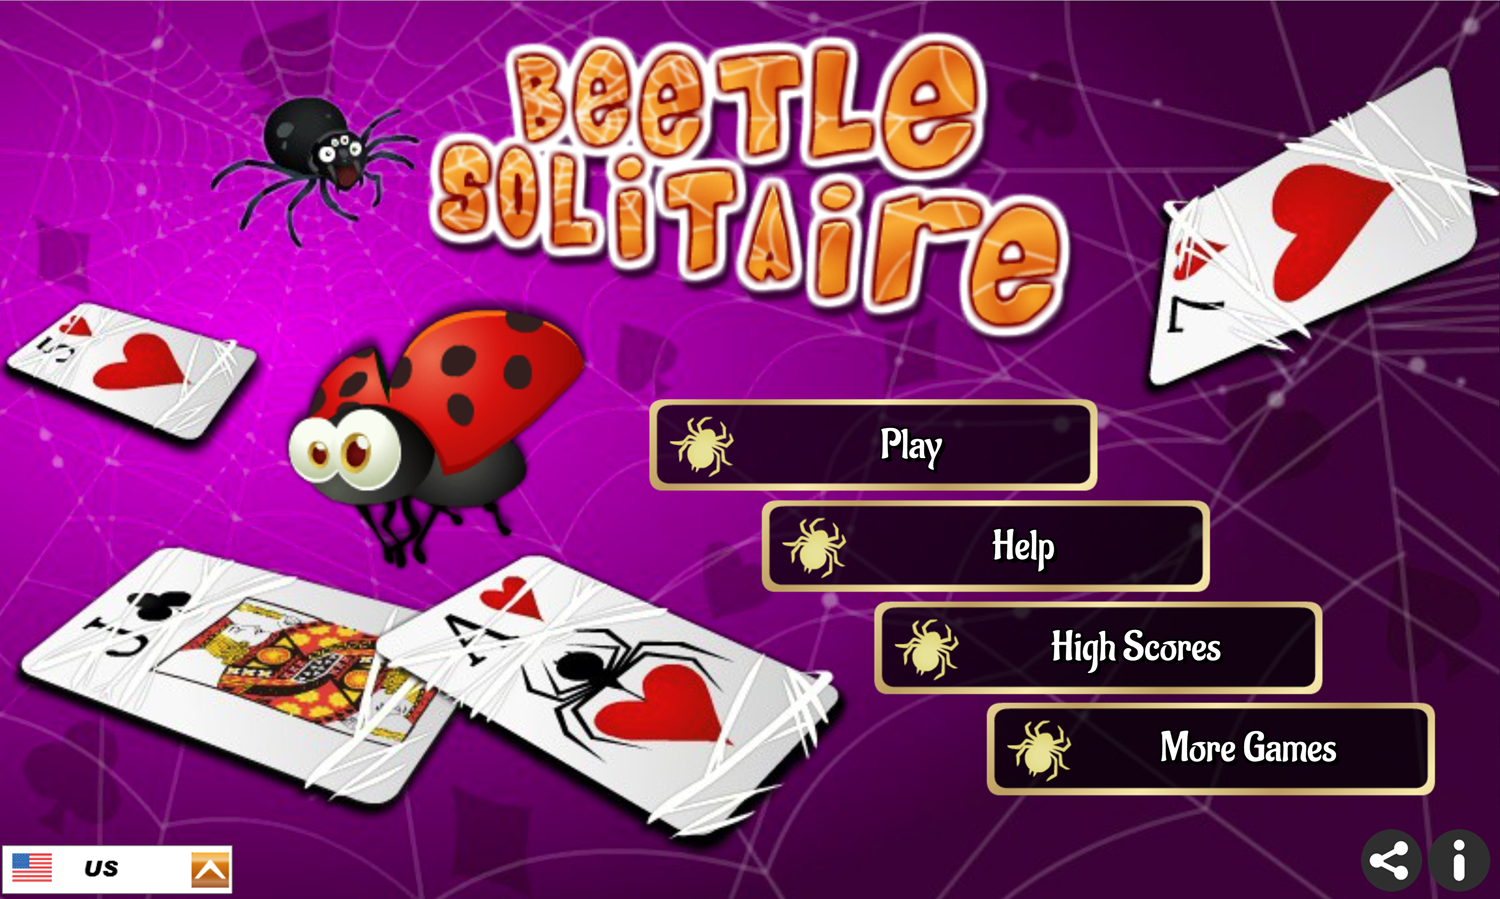 Beetle Solitaire Game Welcome Screen Screenshot.